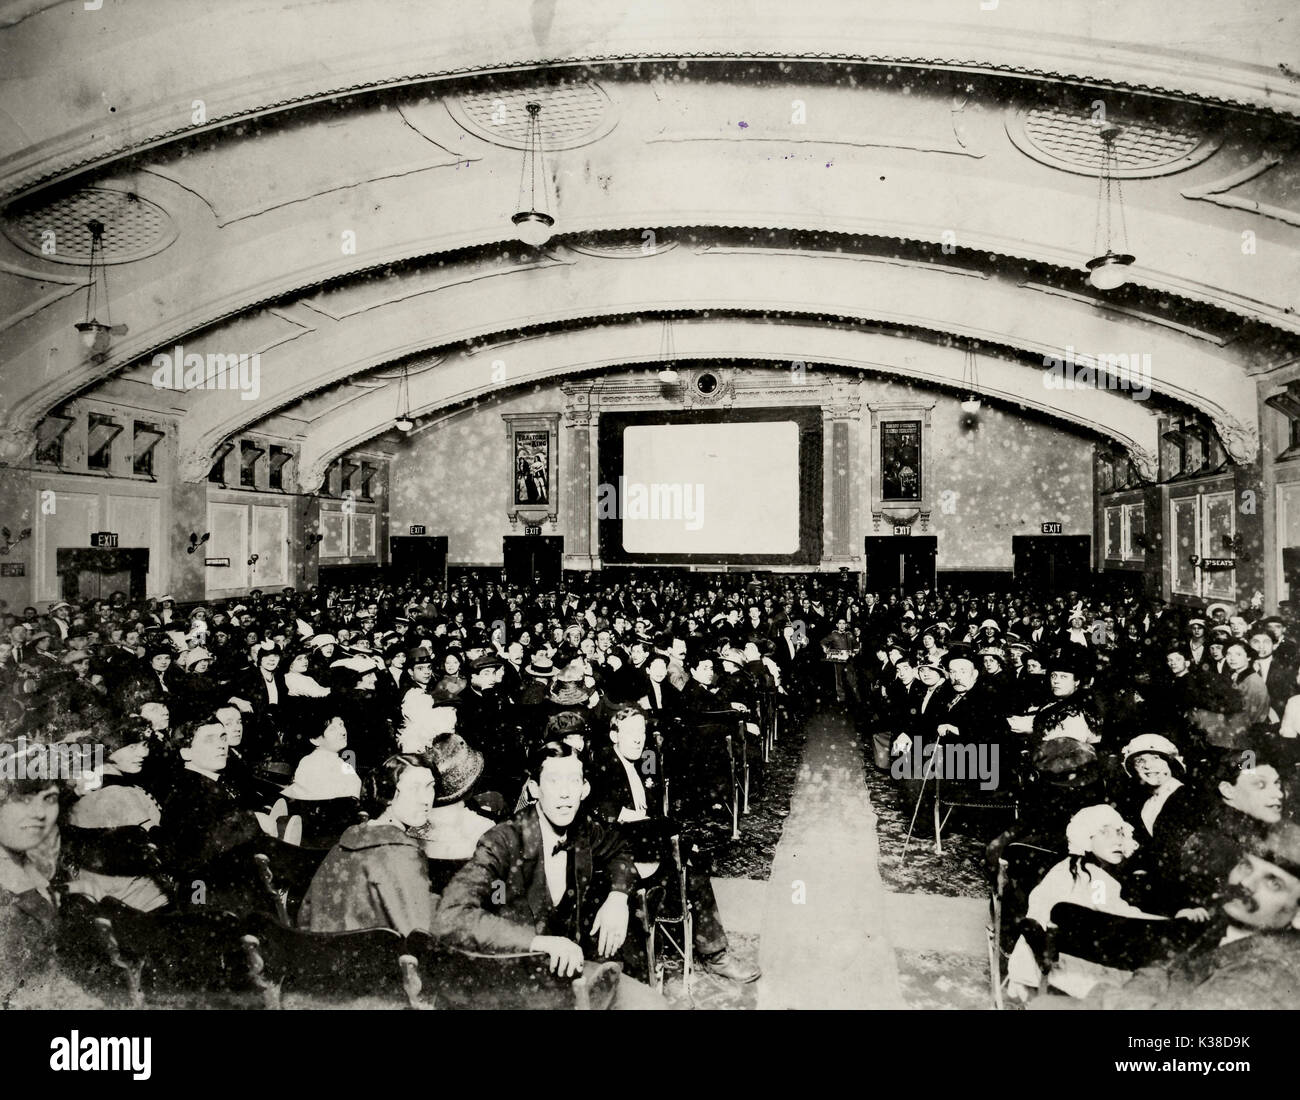 MILE END PALLADIUM CINEMA AUDIENCE CIRCA 1909/1910 Stock Photo - Alamy